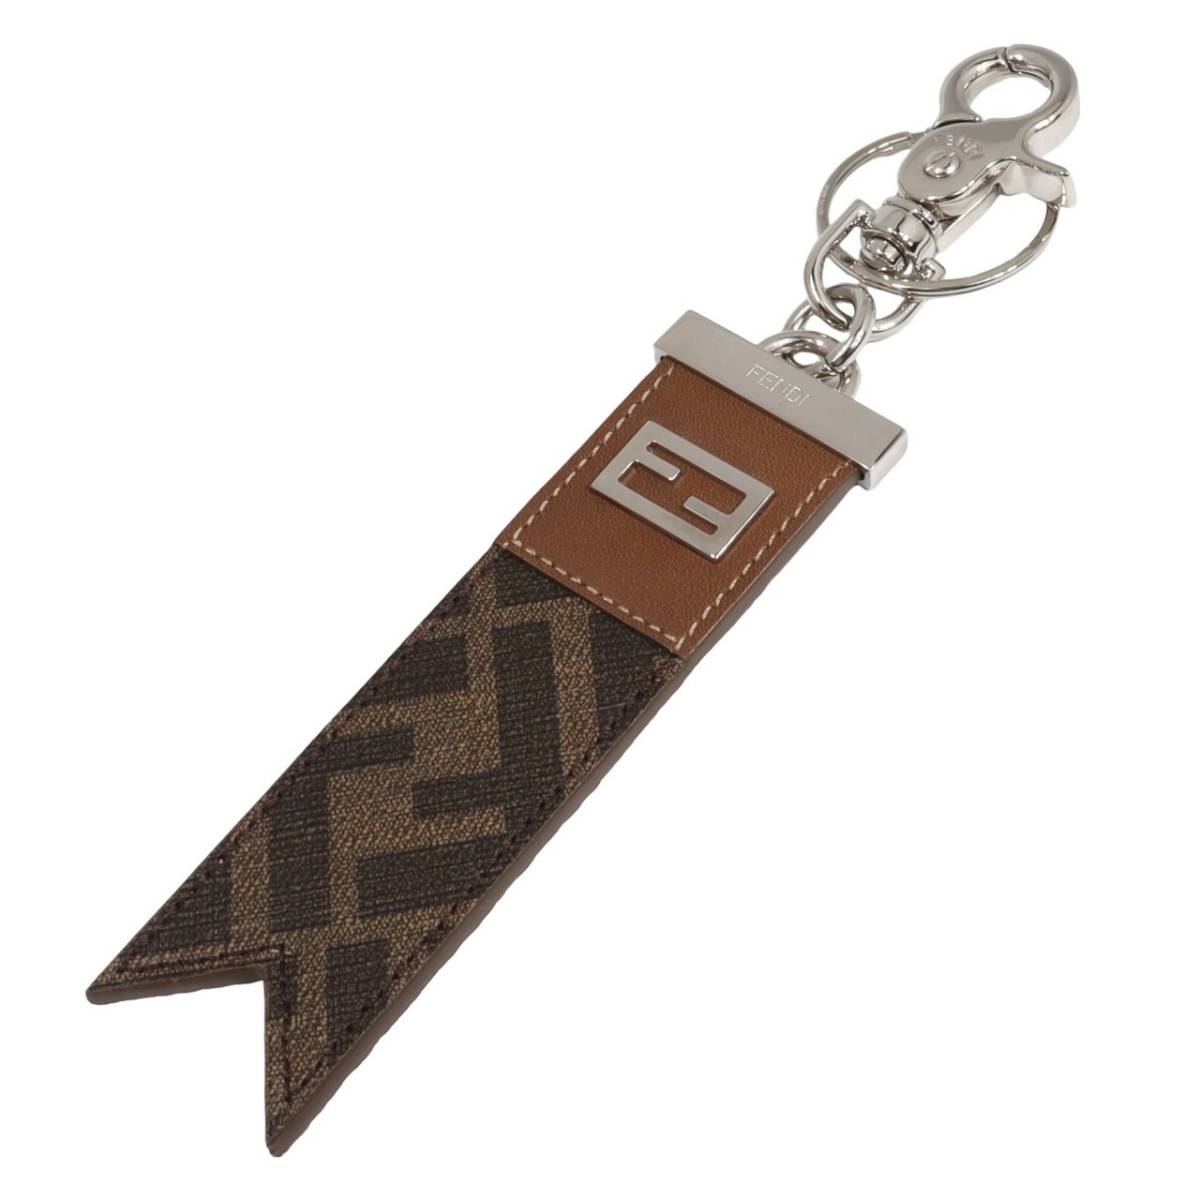 FENDI Fendi Zucca leather FF motif key ring key holder bag charm Brown unisex 7AP061 AHTP F1G8K